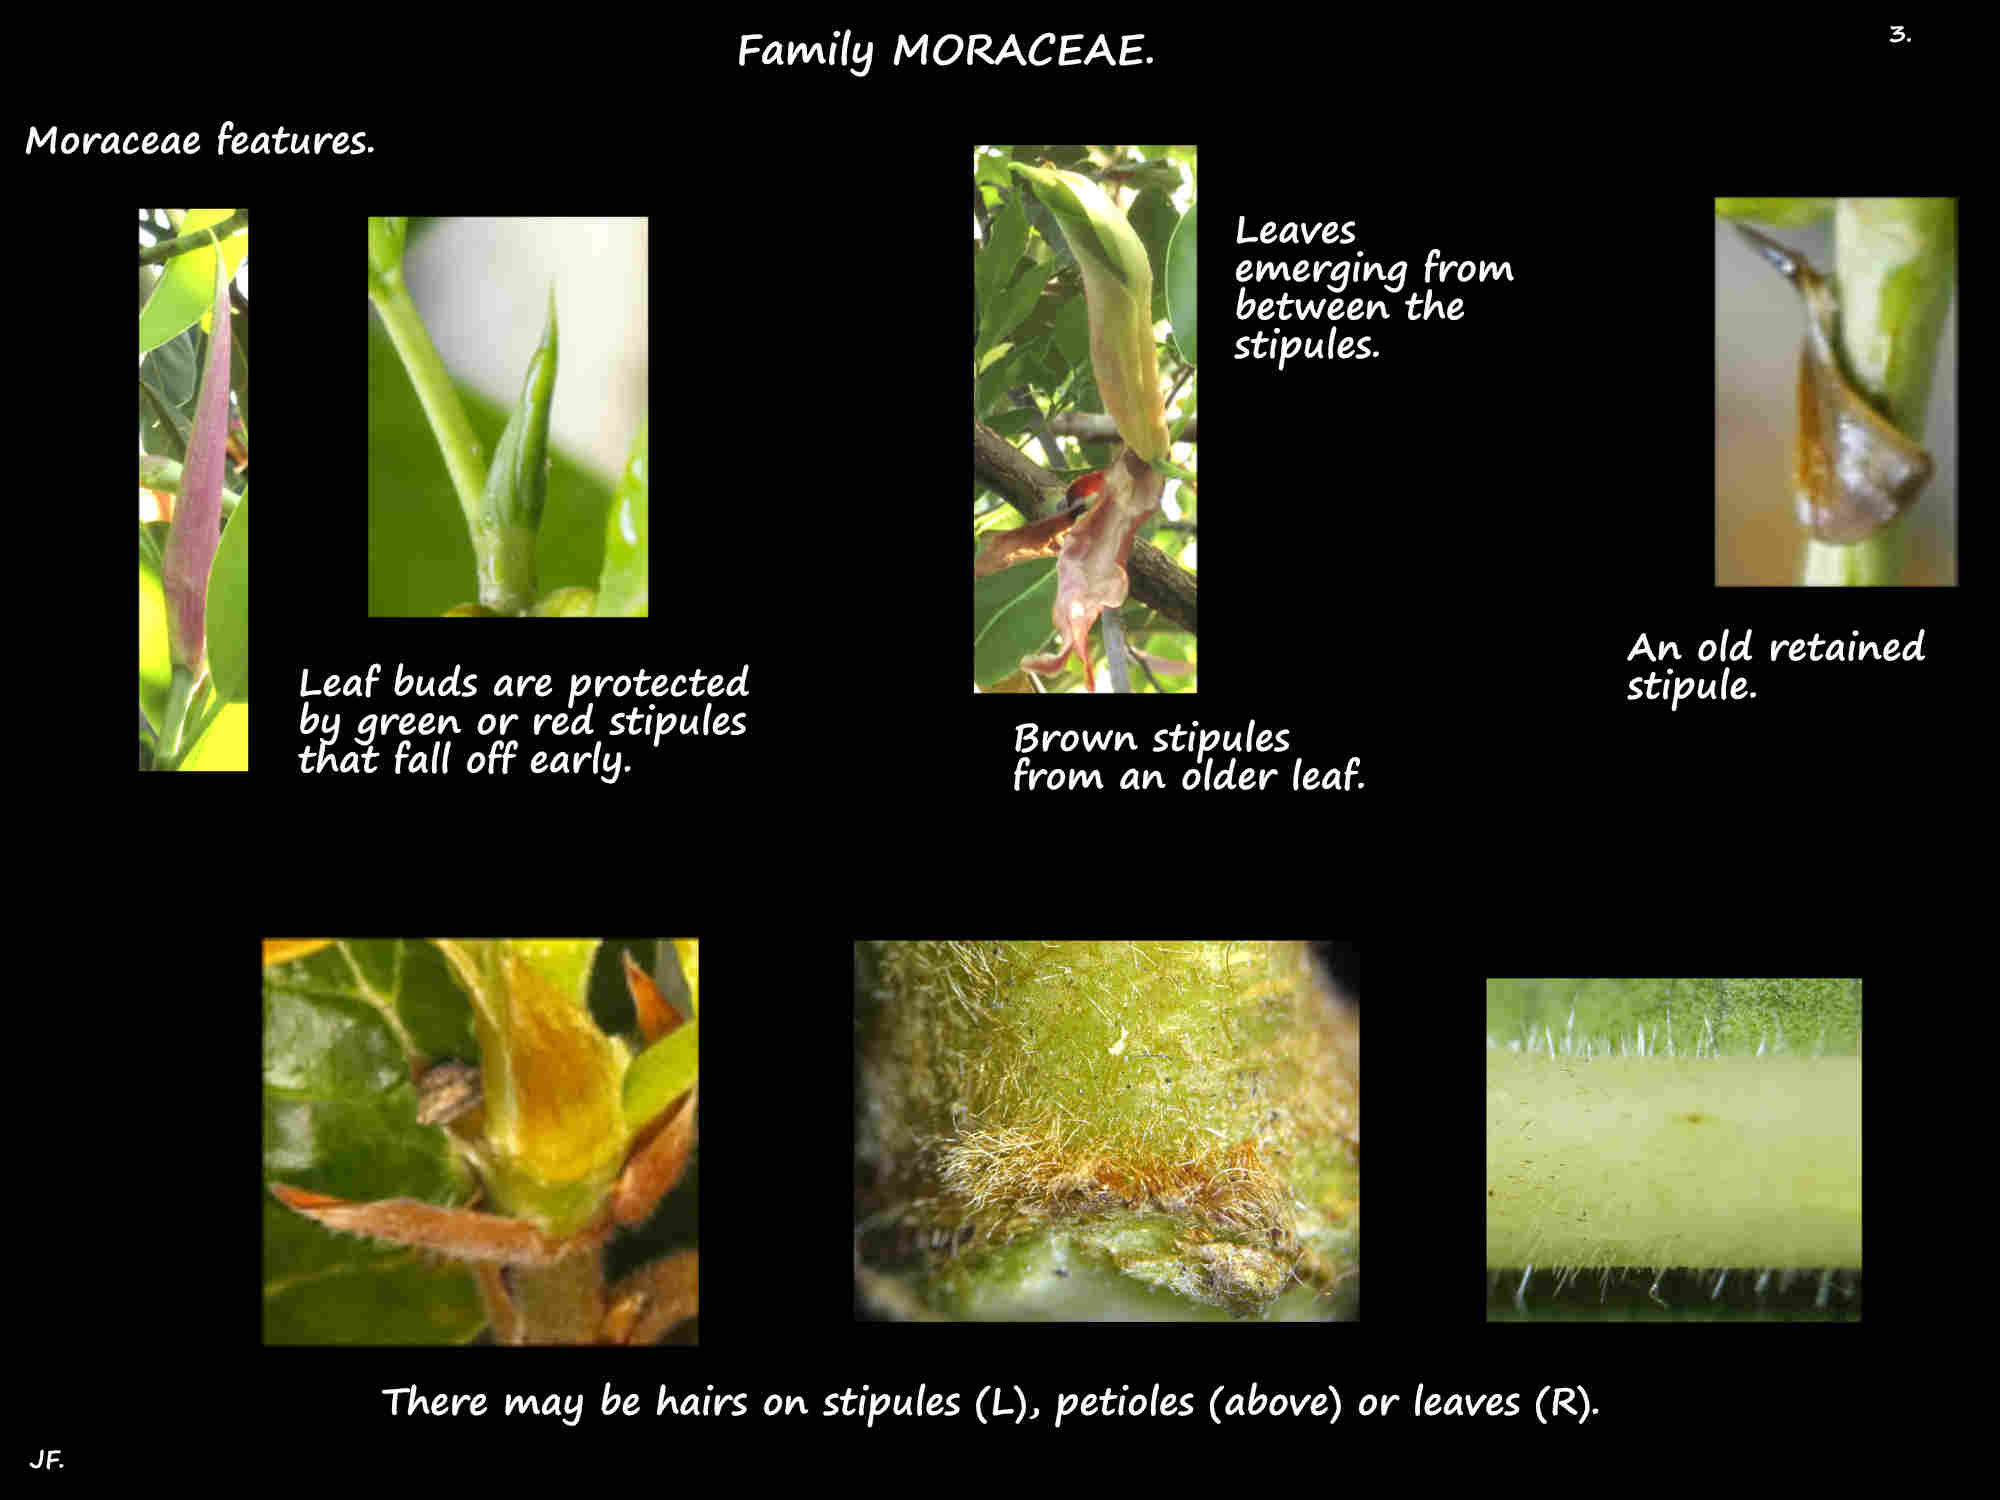 3 Stipules on Moraceae leaf buds